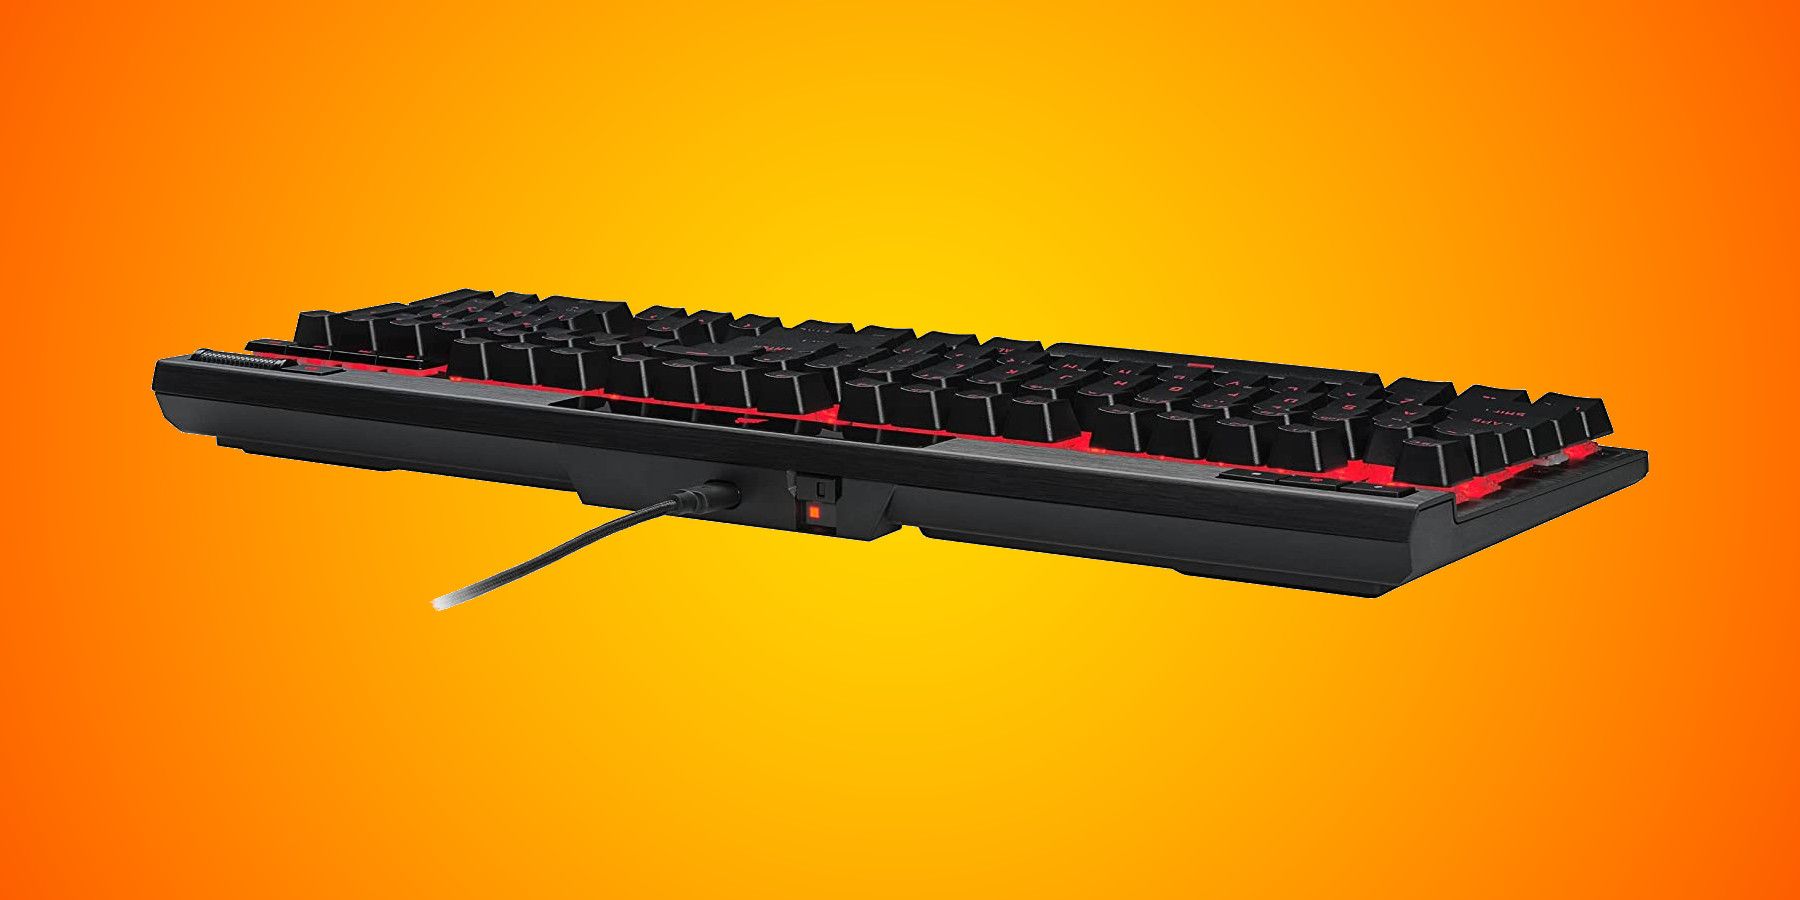 best gaming keyboard deals hub january